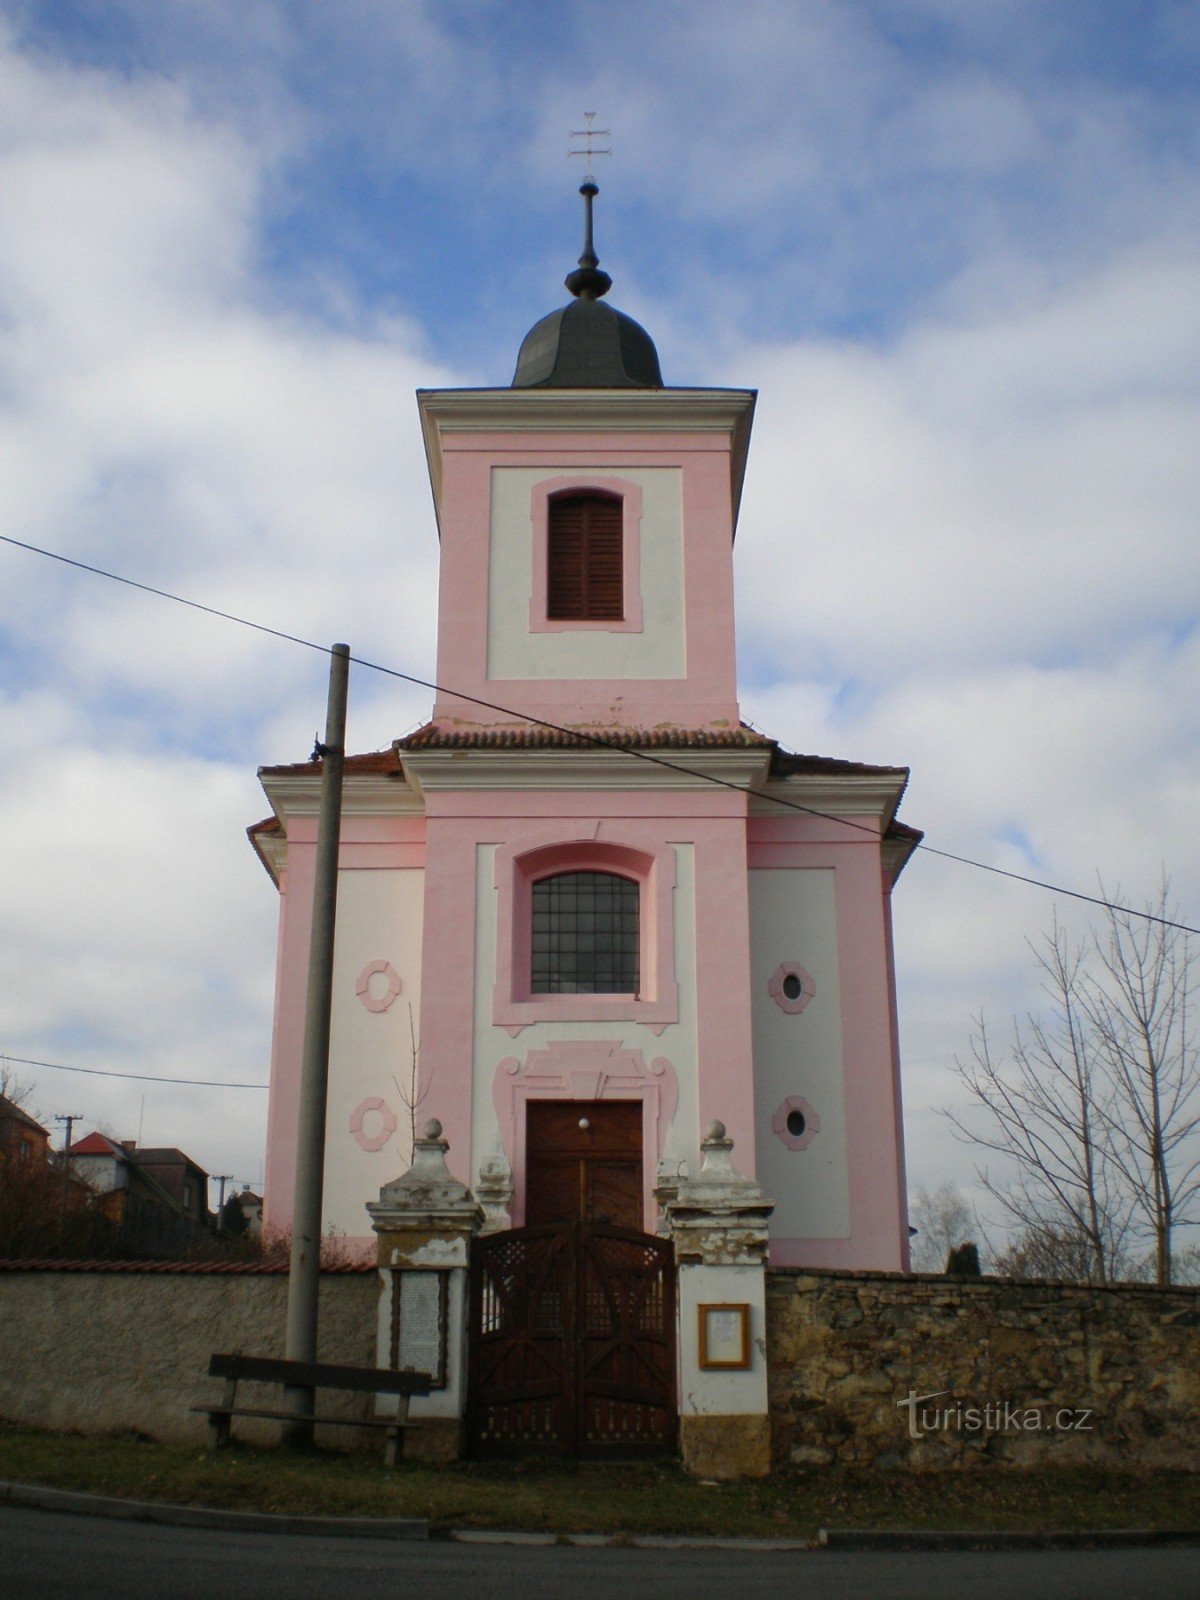 Thị trấn - Nhà thờ St. Jakub